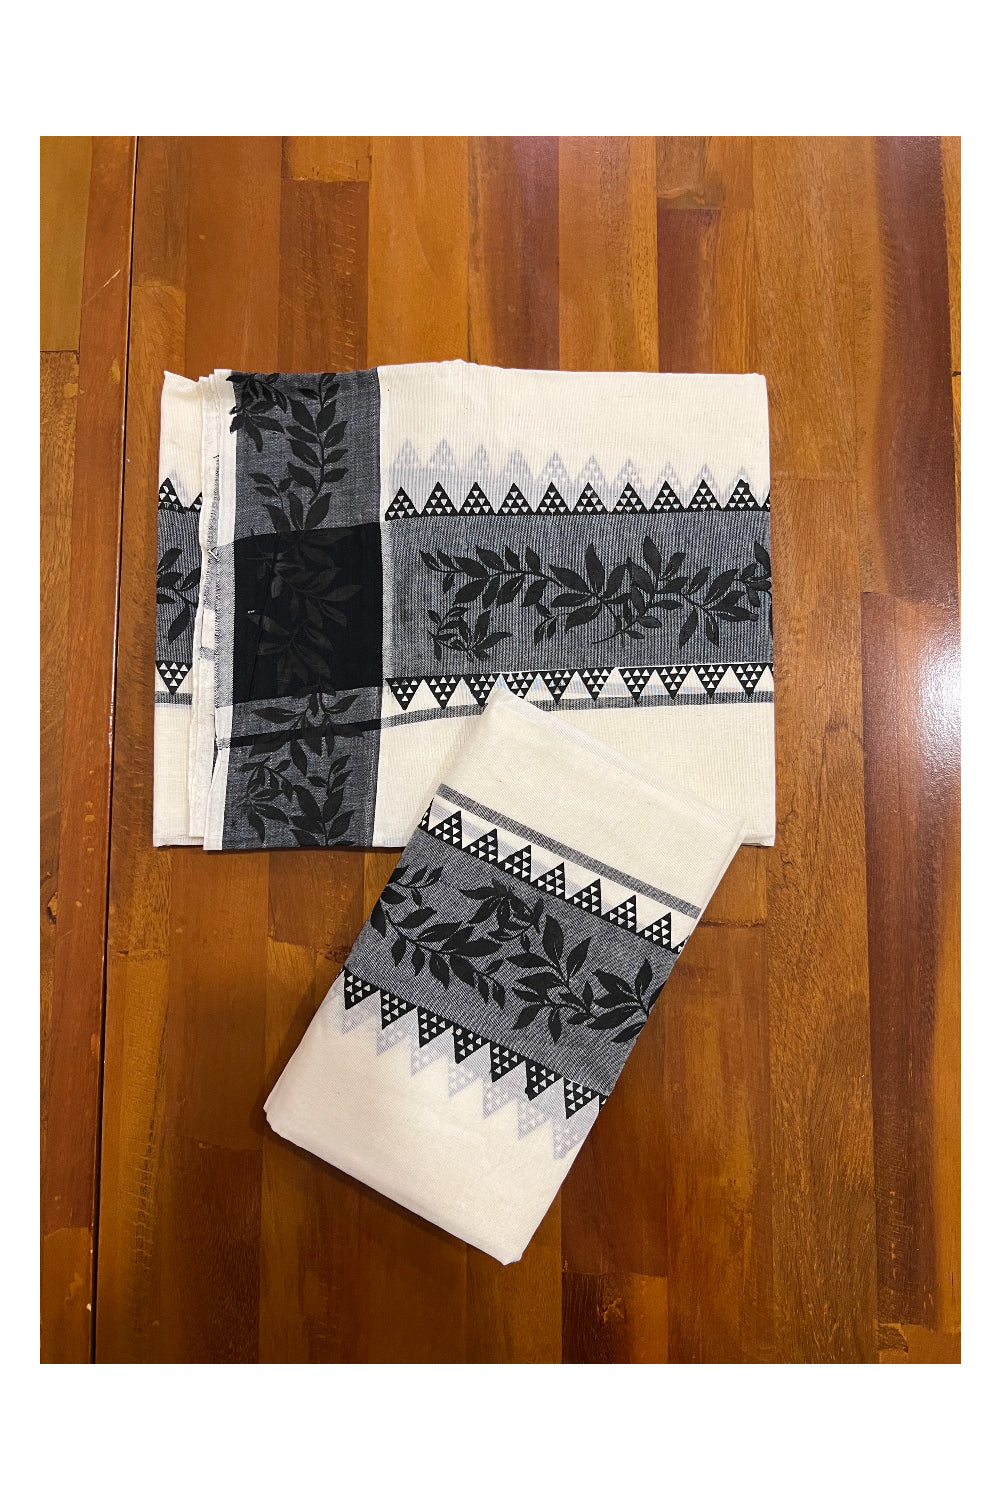 Kerala Cotton Set Mundu (Mundum Neriyathum) with Black Leaf Temple Block Prints on Border